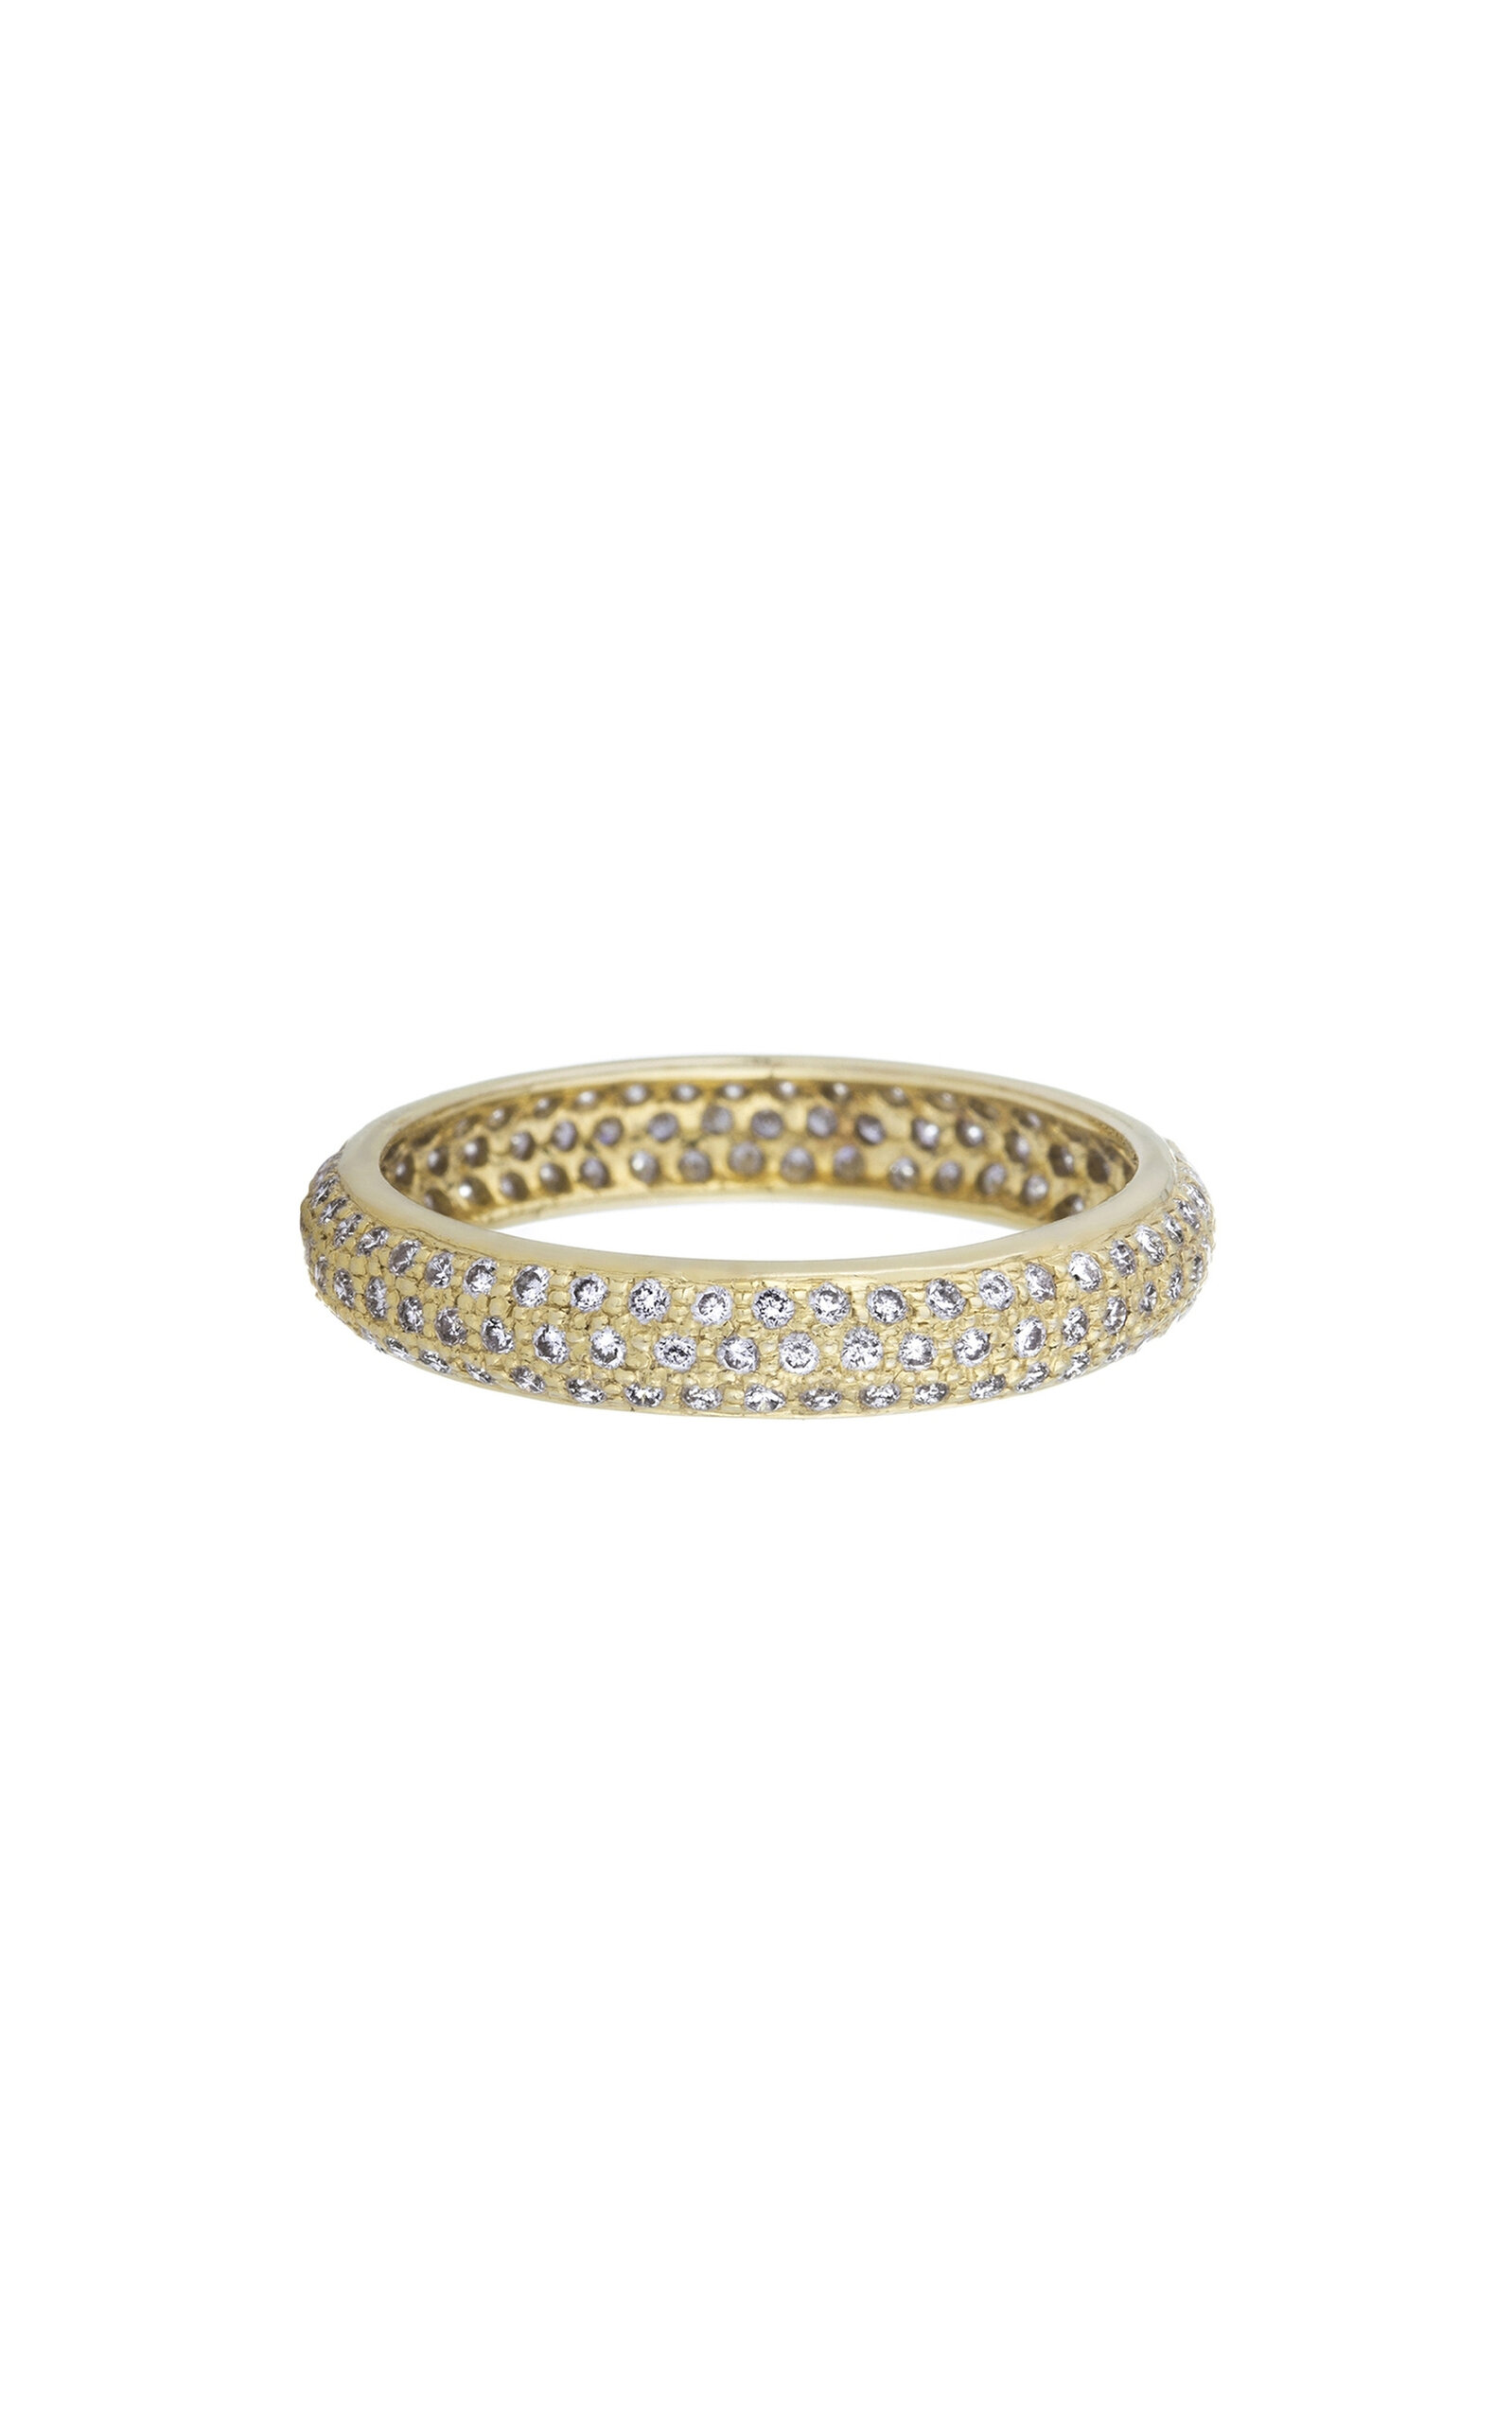 The Tire 18K Yellow Gold Diamond Ring